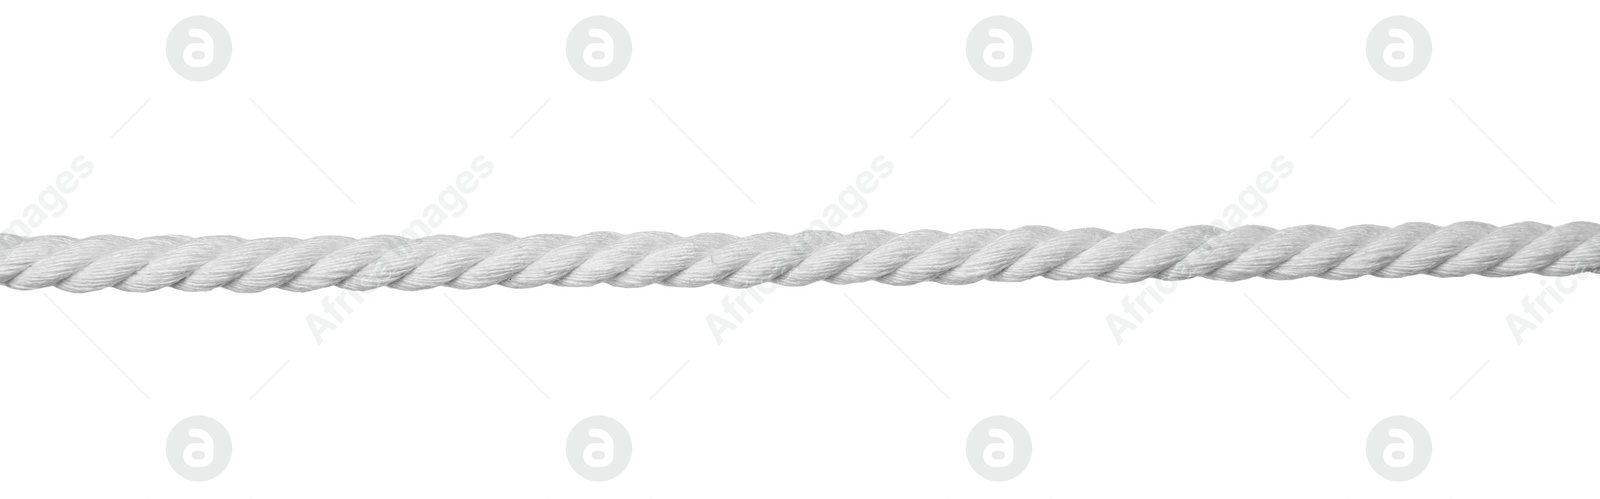 Photo of Long durable hemp rope isolated on white